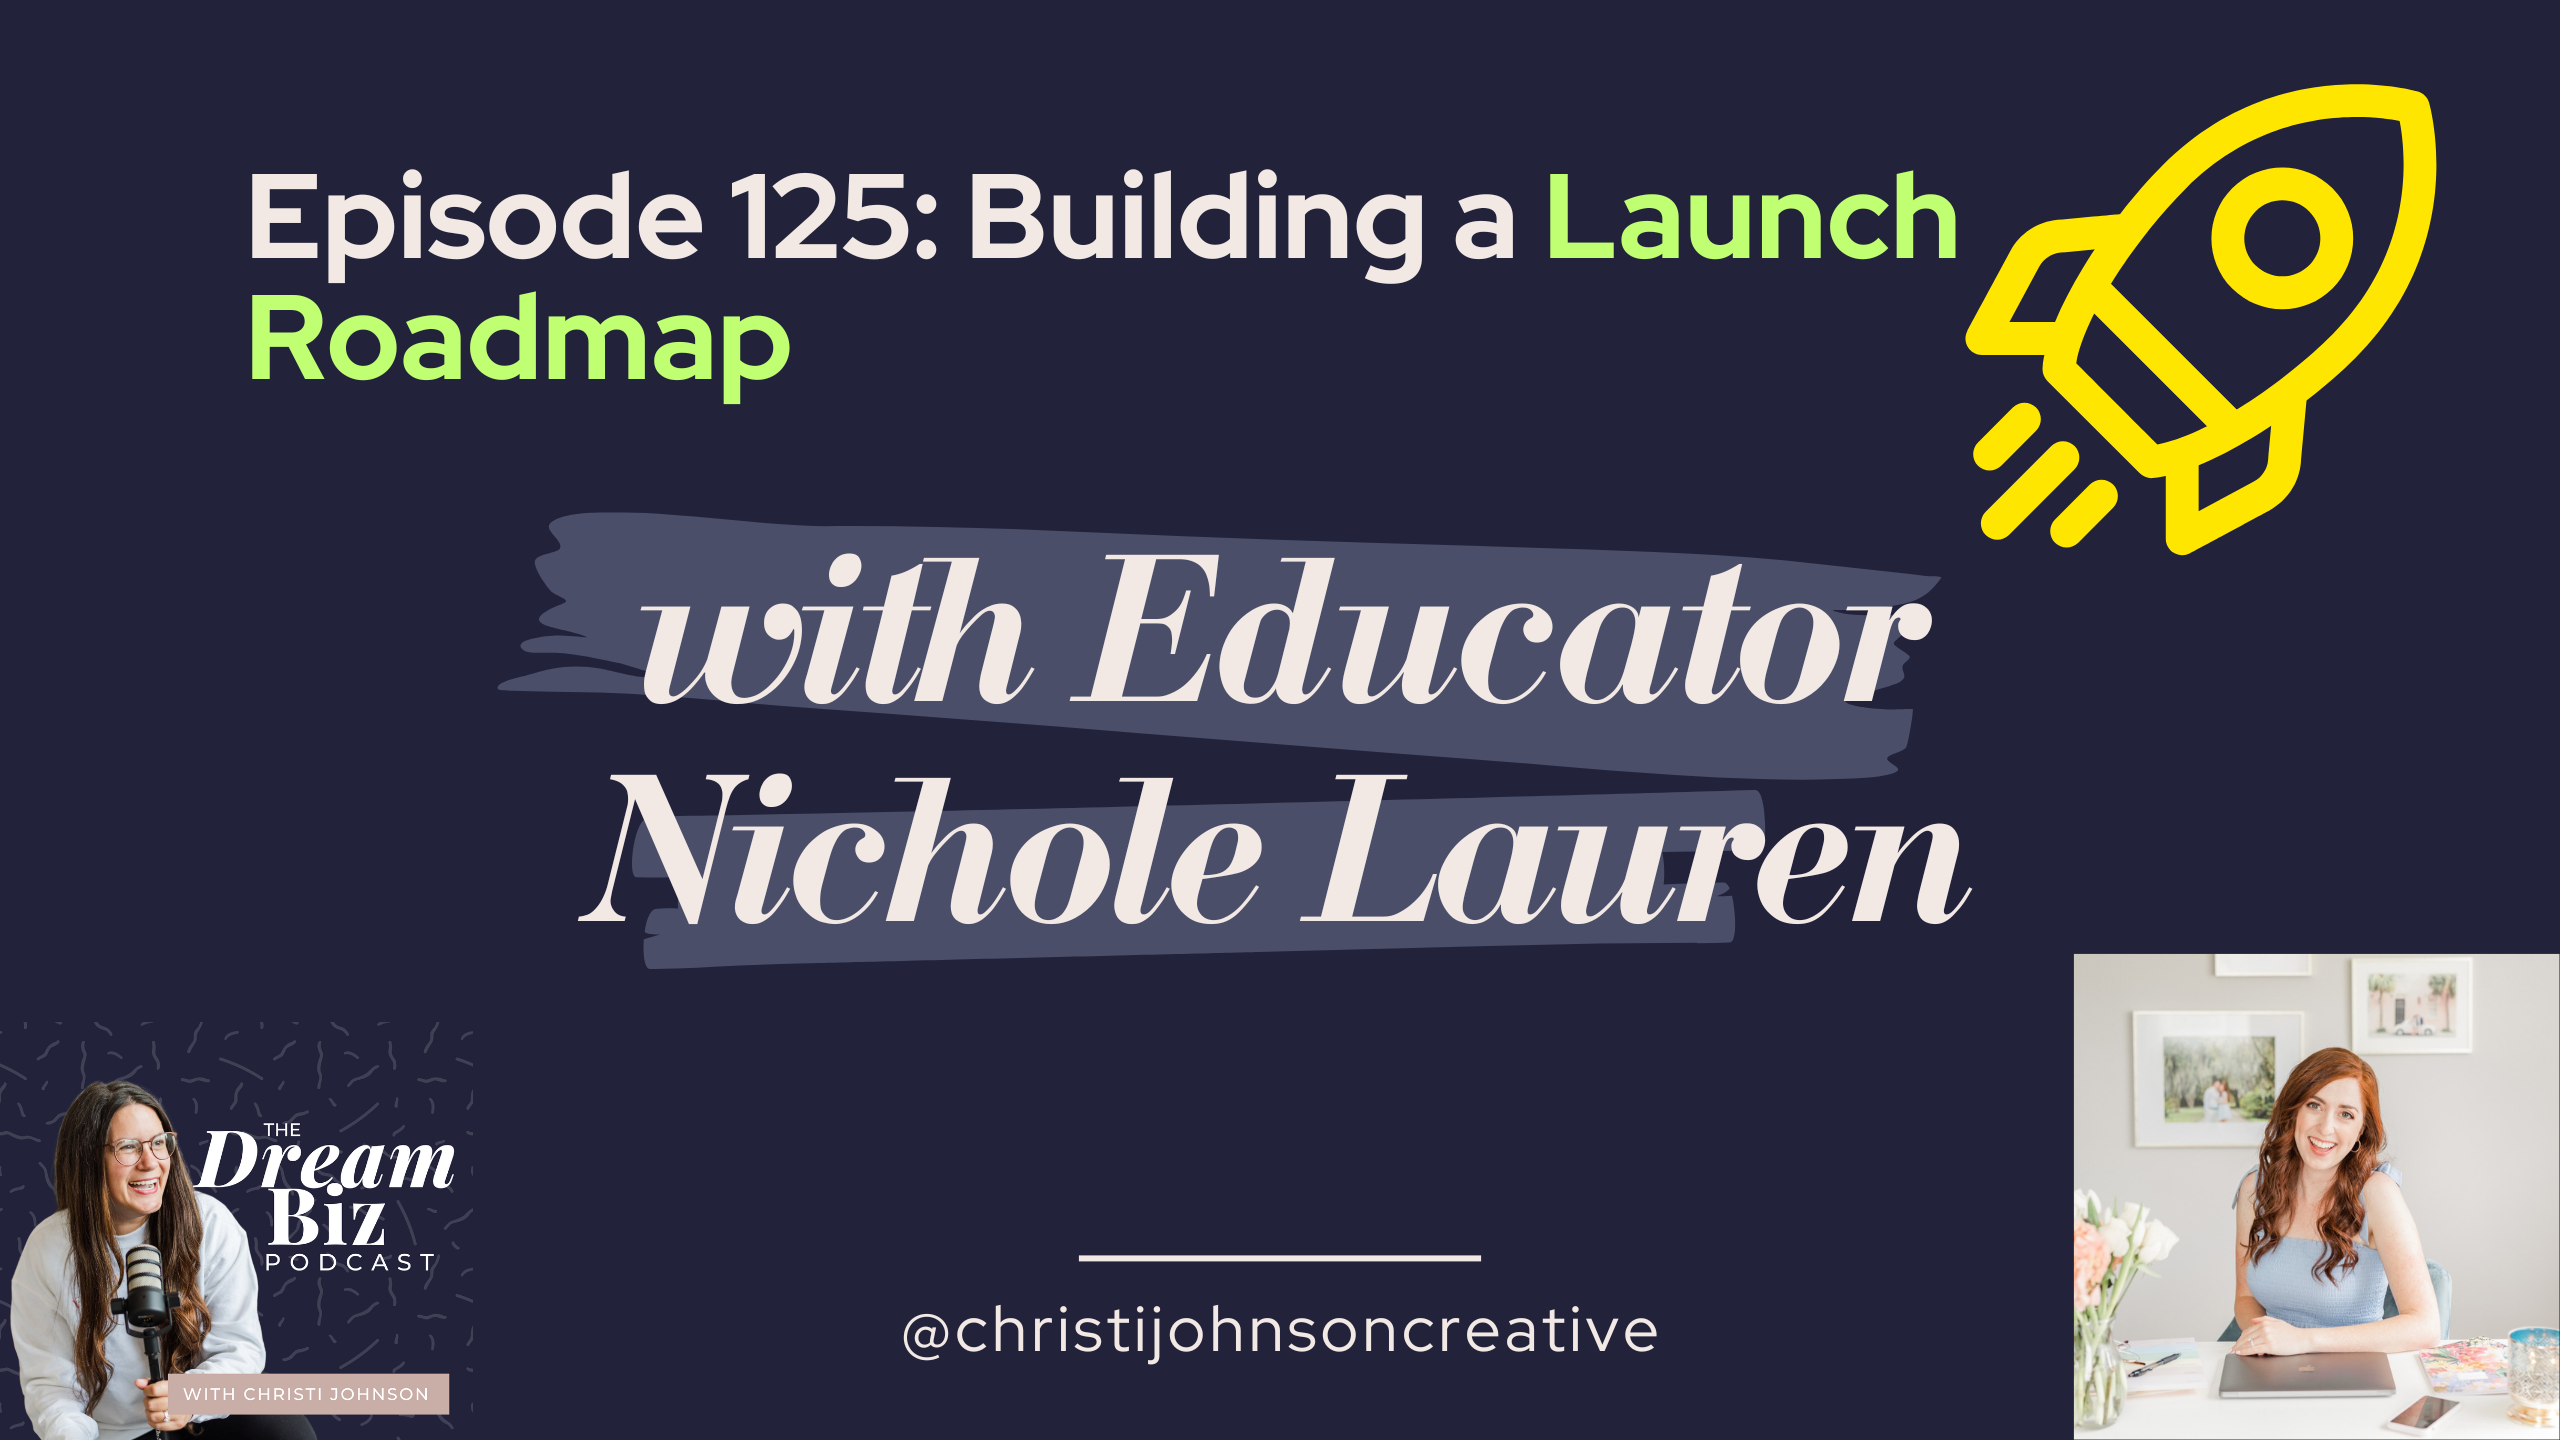 ID: Building a Launch Roadmap with Educator Nichole Lauren.